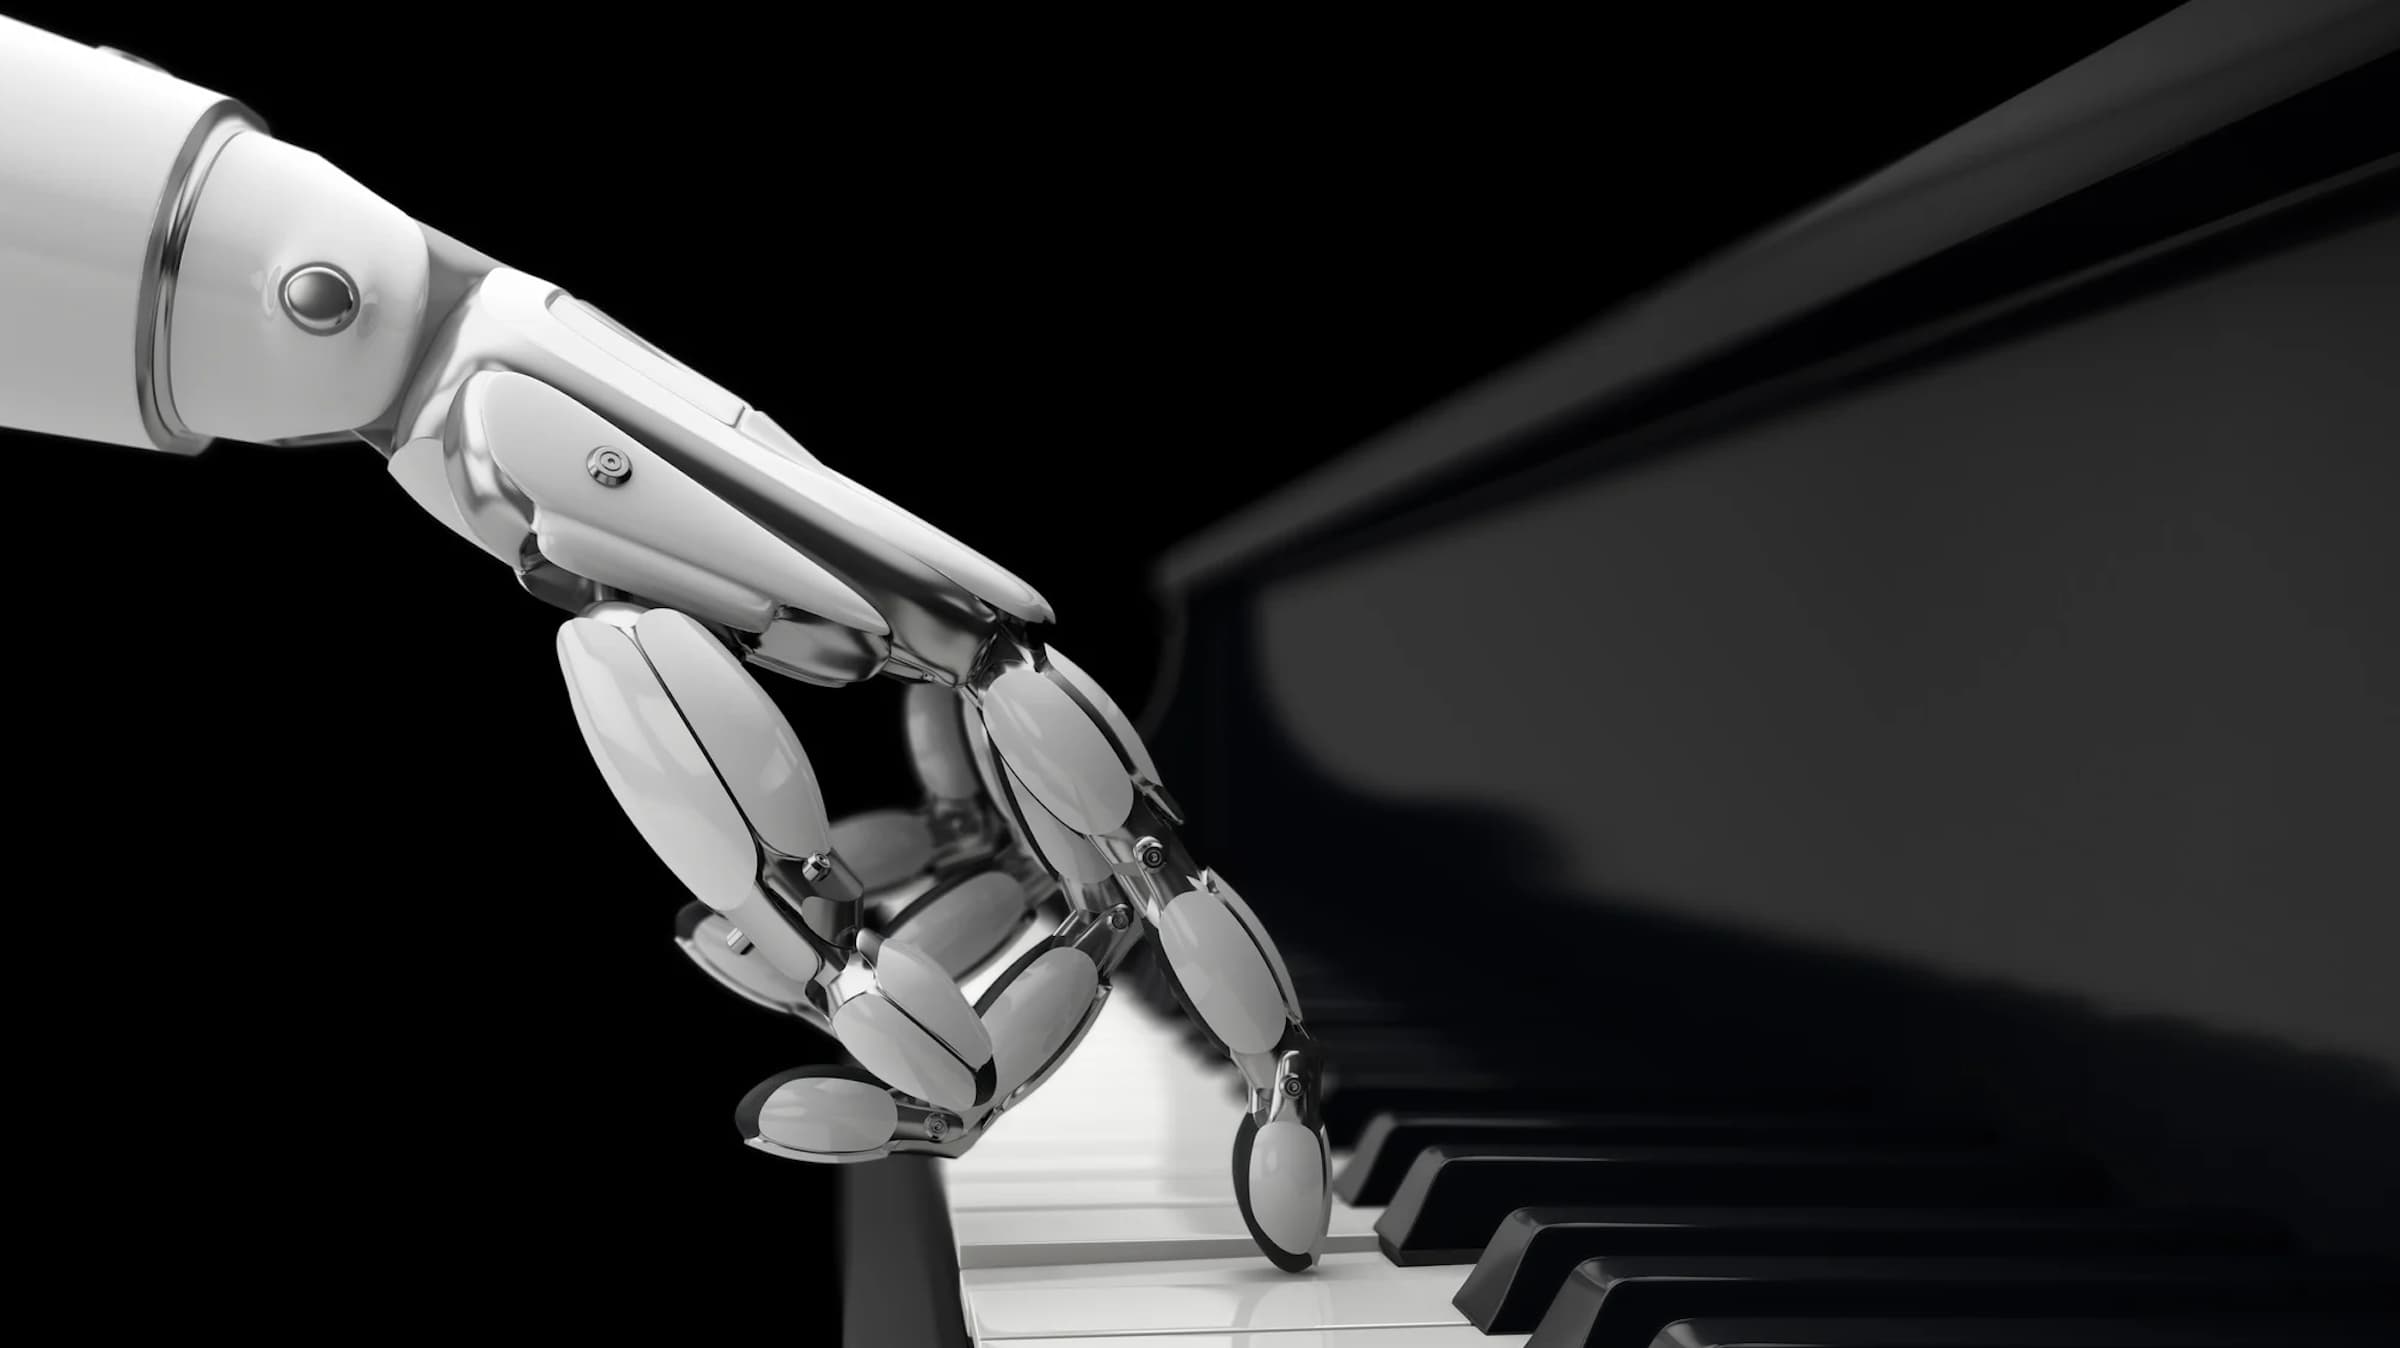 Robot playing piano